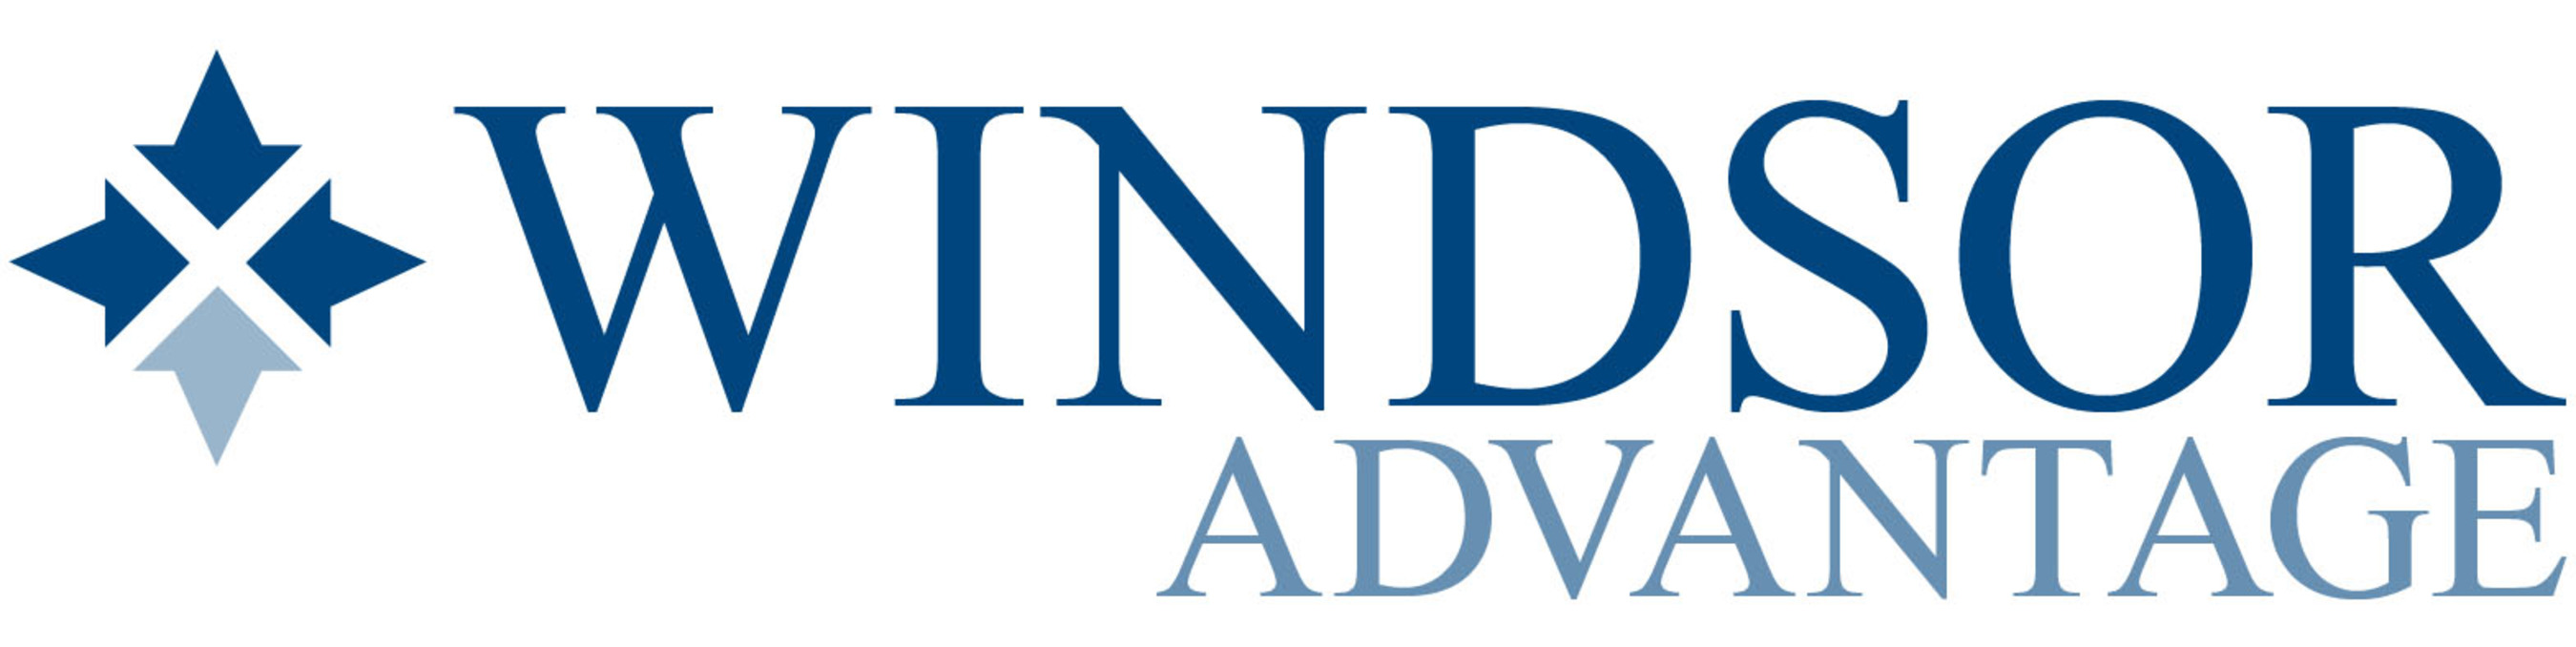 Windsor Advantage logo